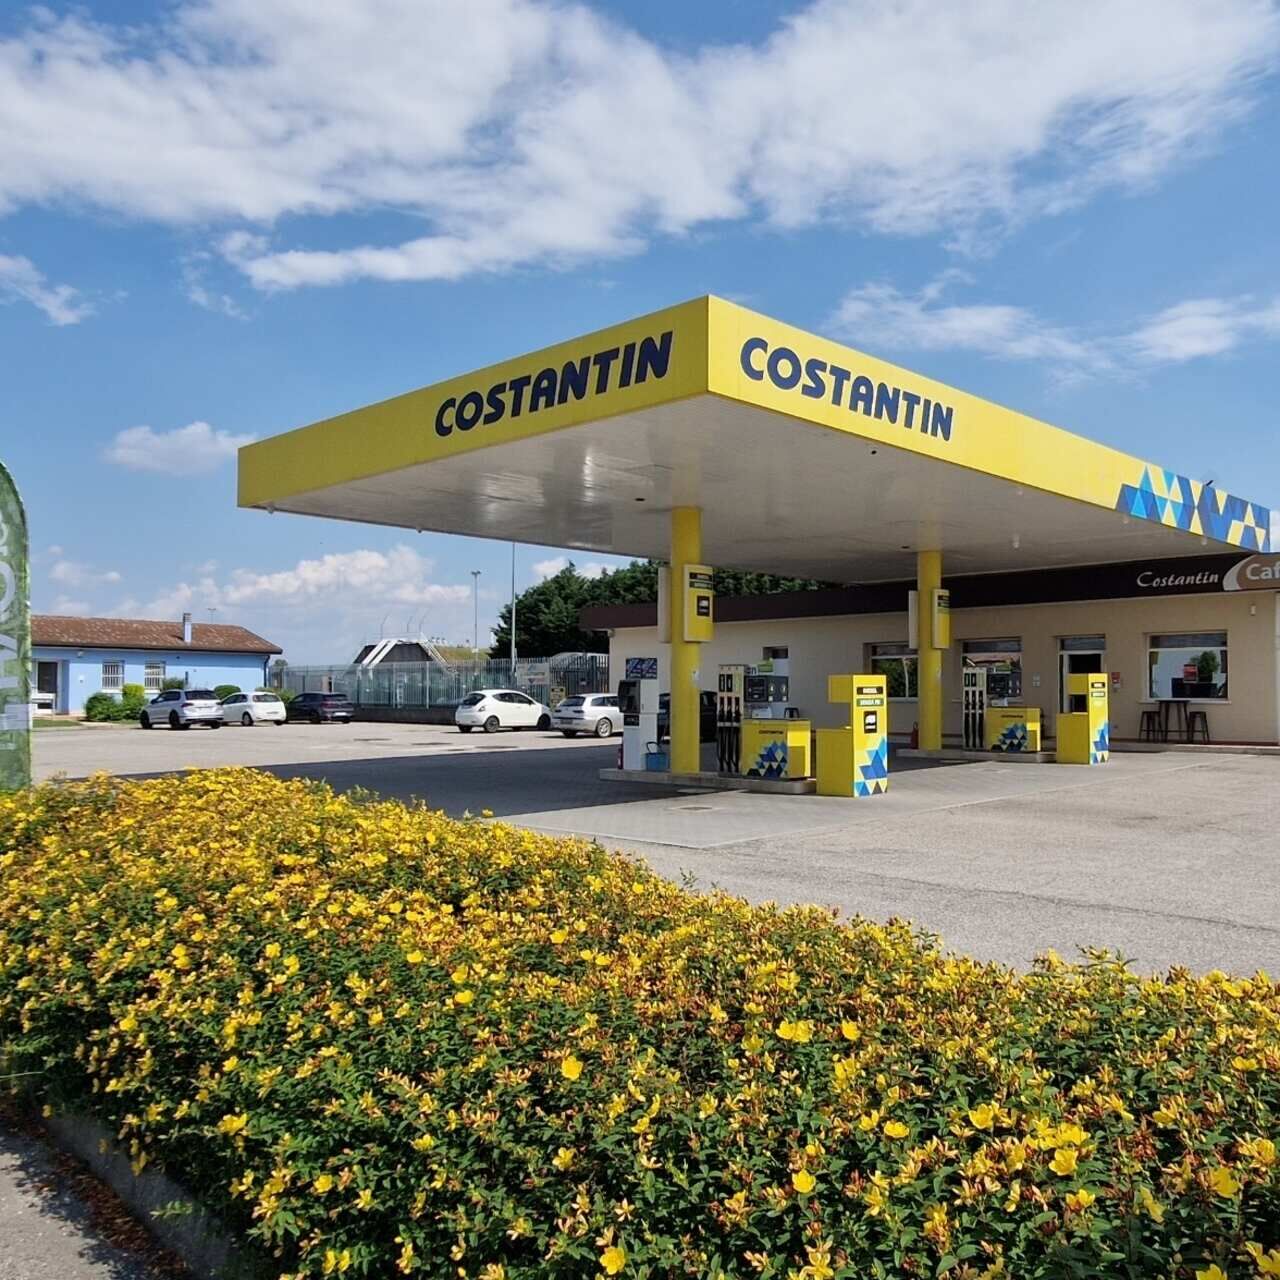 Biodiesel: la stazione di servizio Costantin di Merlara, in provincia di Padova, vende esclusivamente HVO100 o Hydrogenated Vegetable Oil